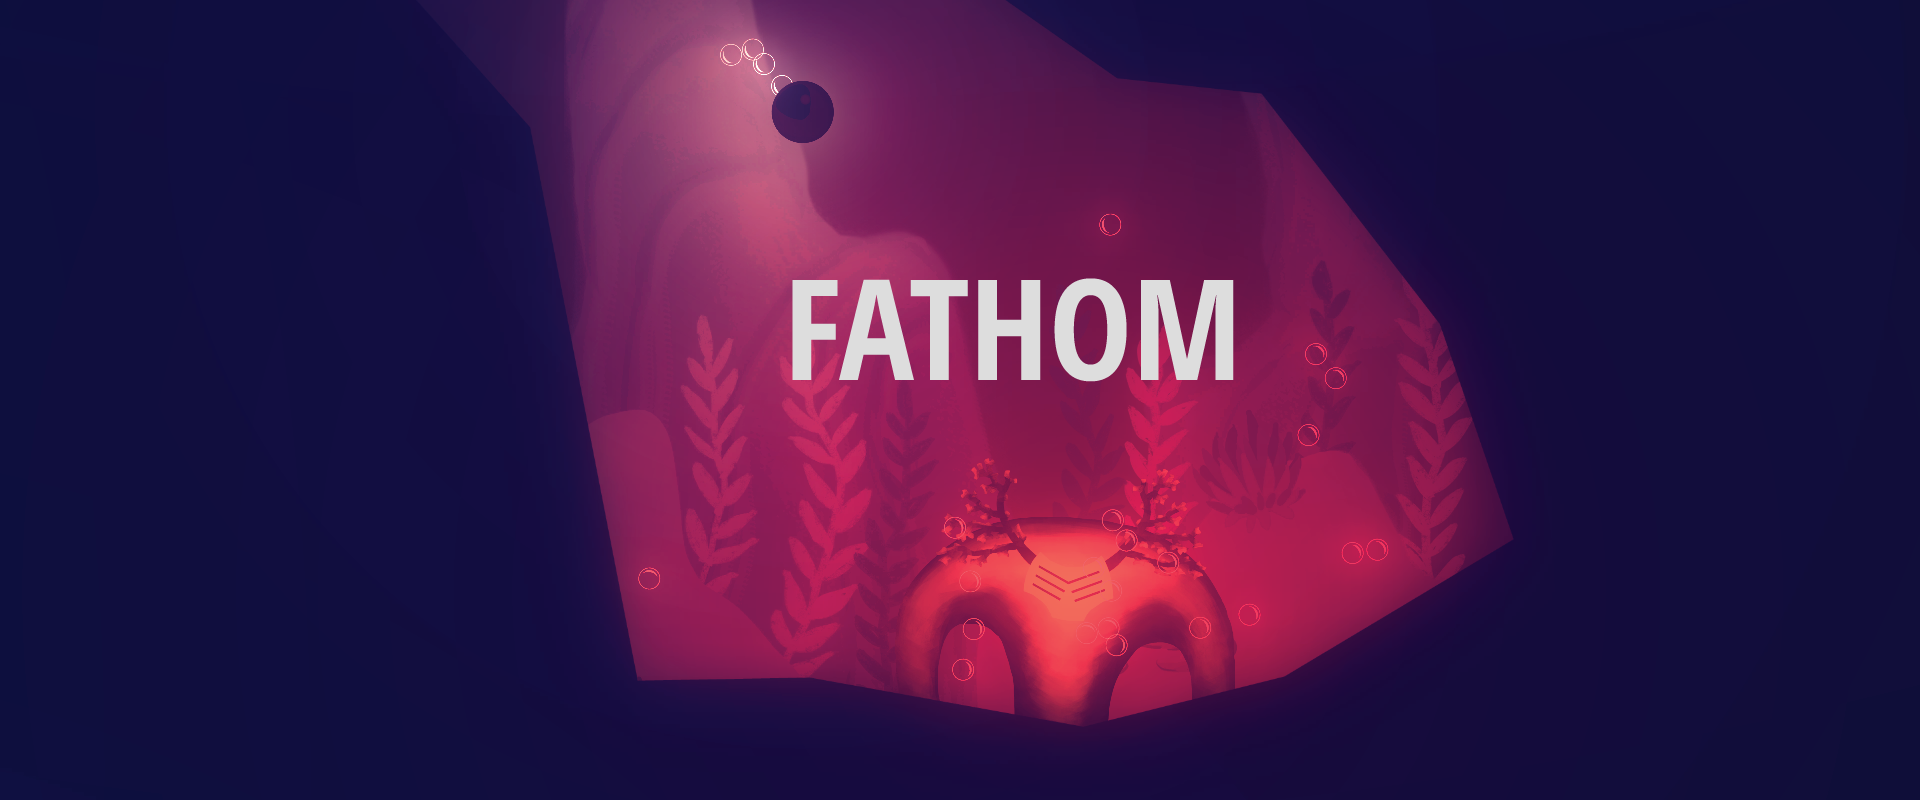 Fathom